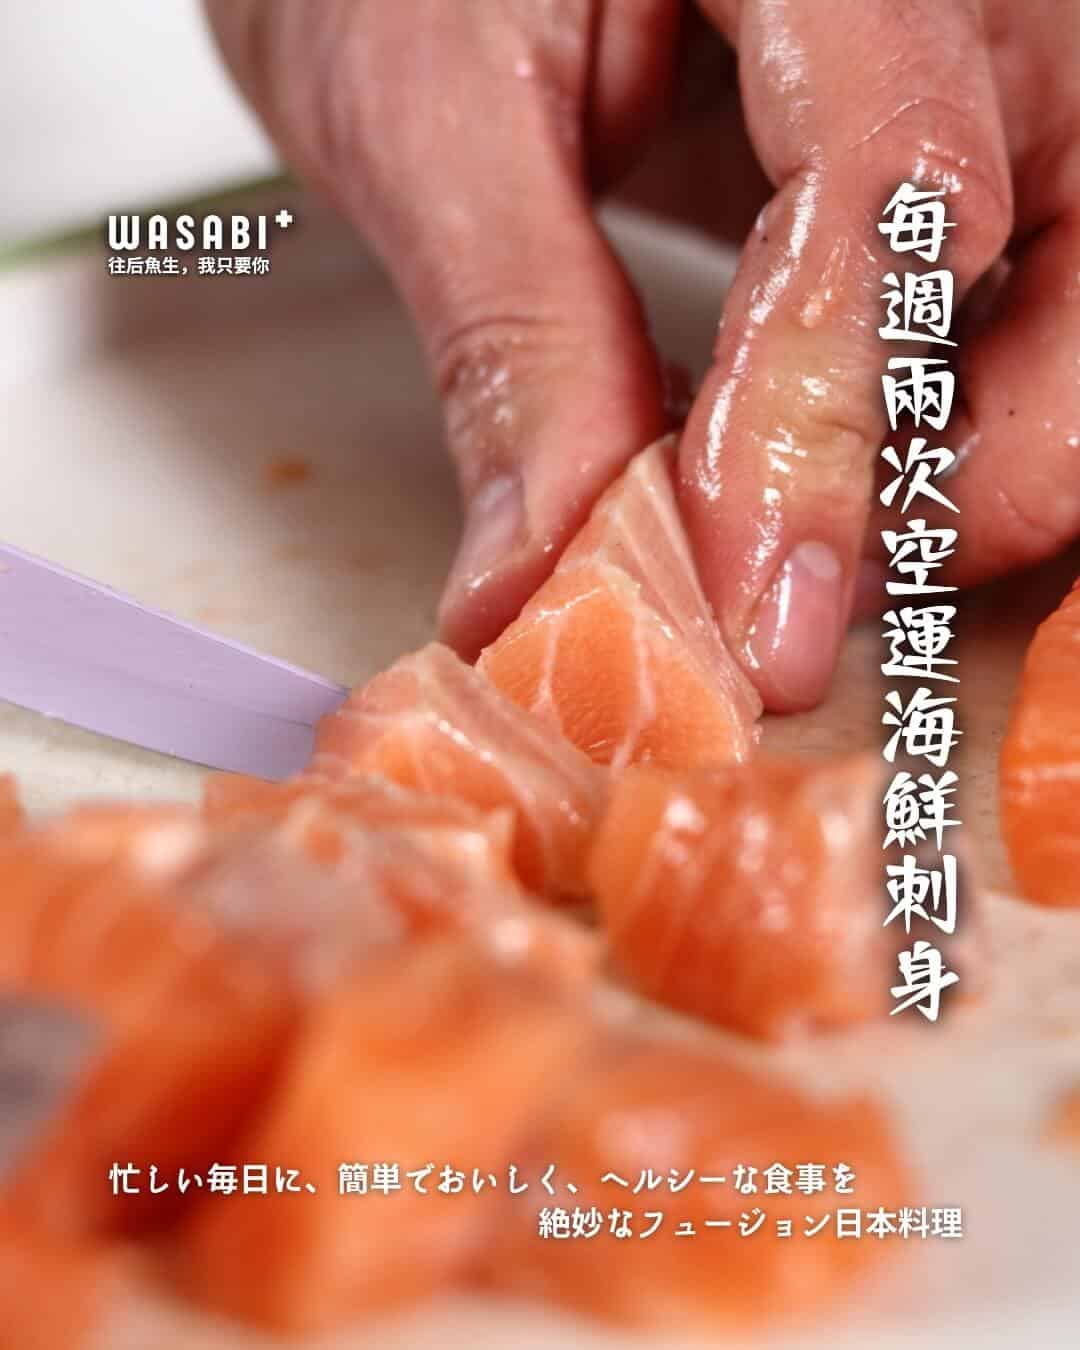 kepong community wasabi plus 16